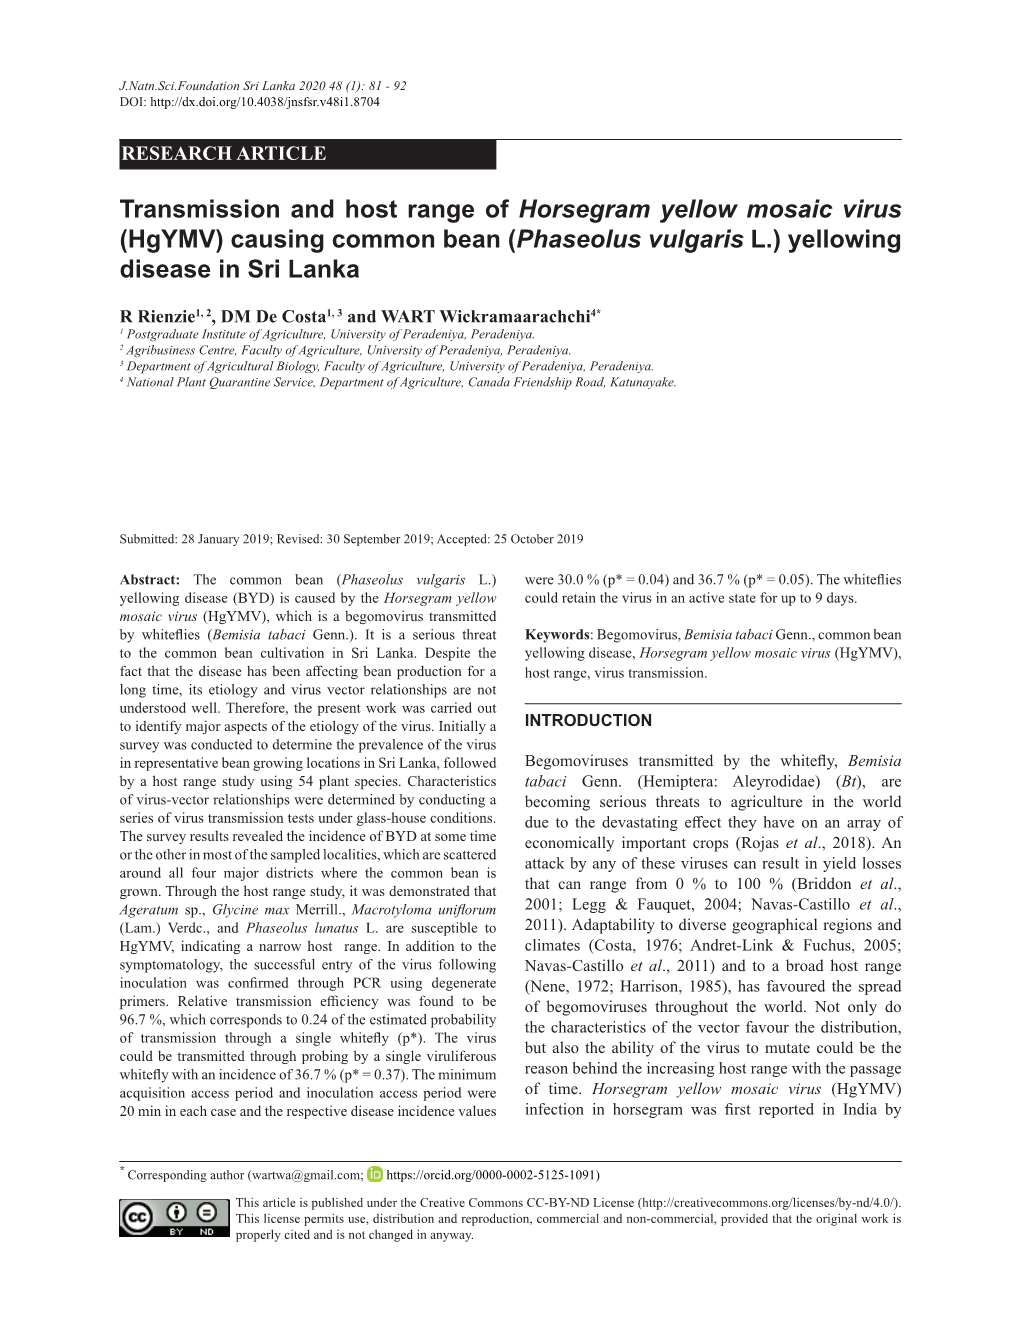 Transmission and Host Range of Horsegram Yellow Mosaic Virus